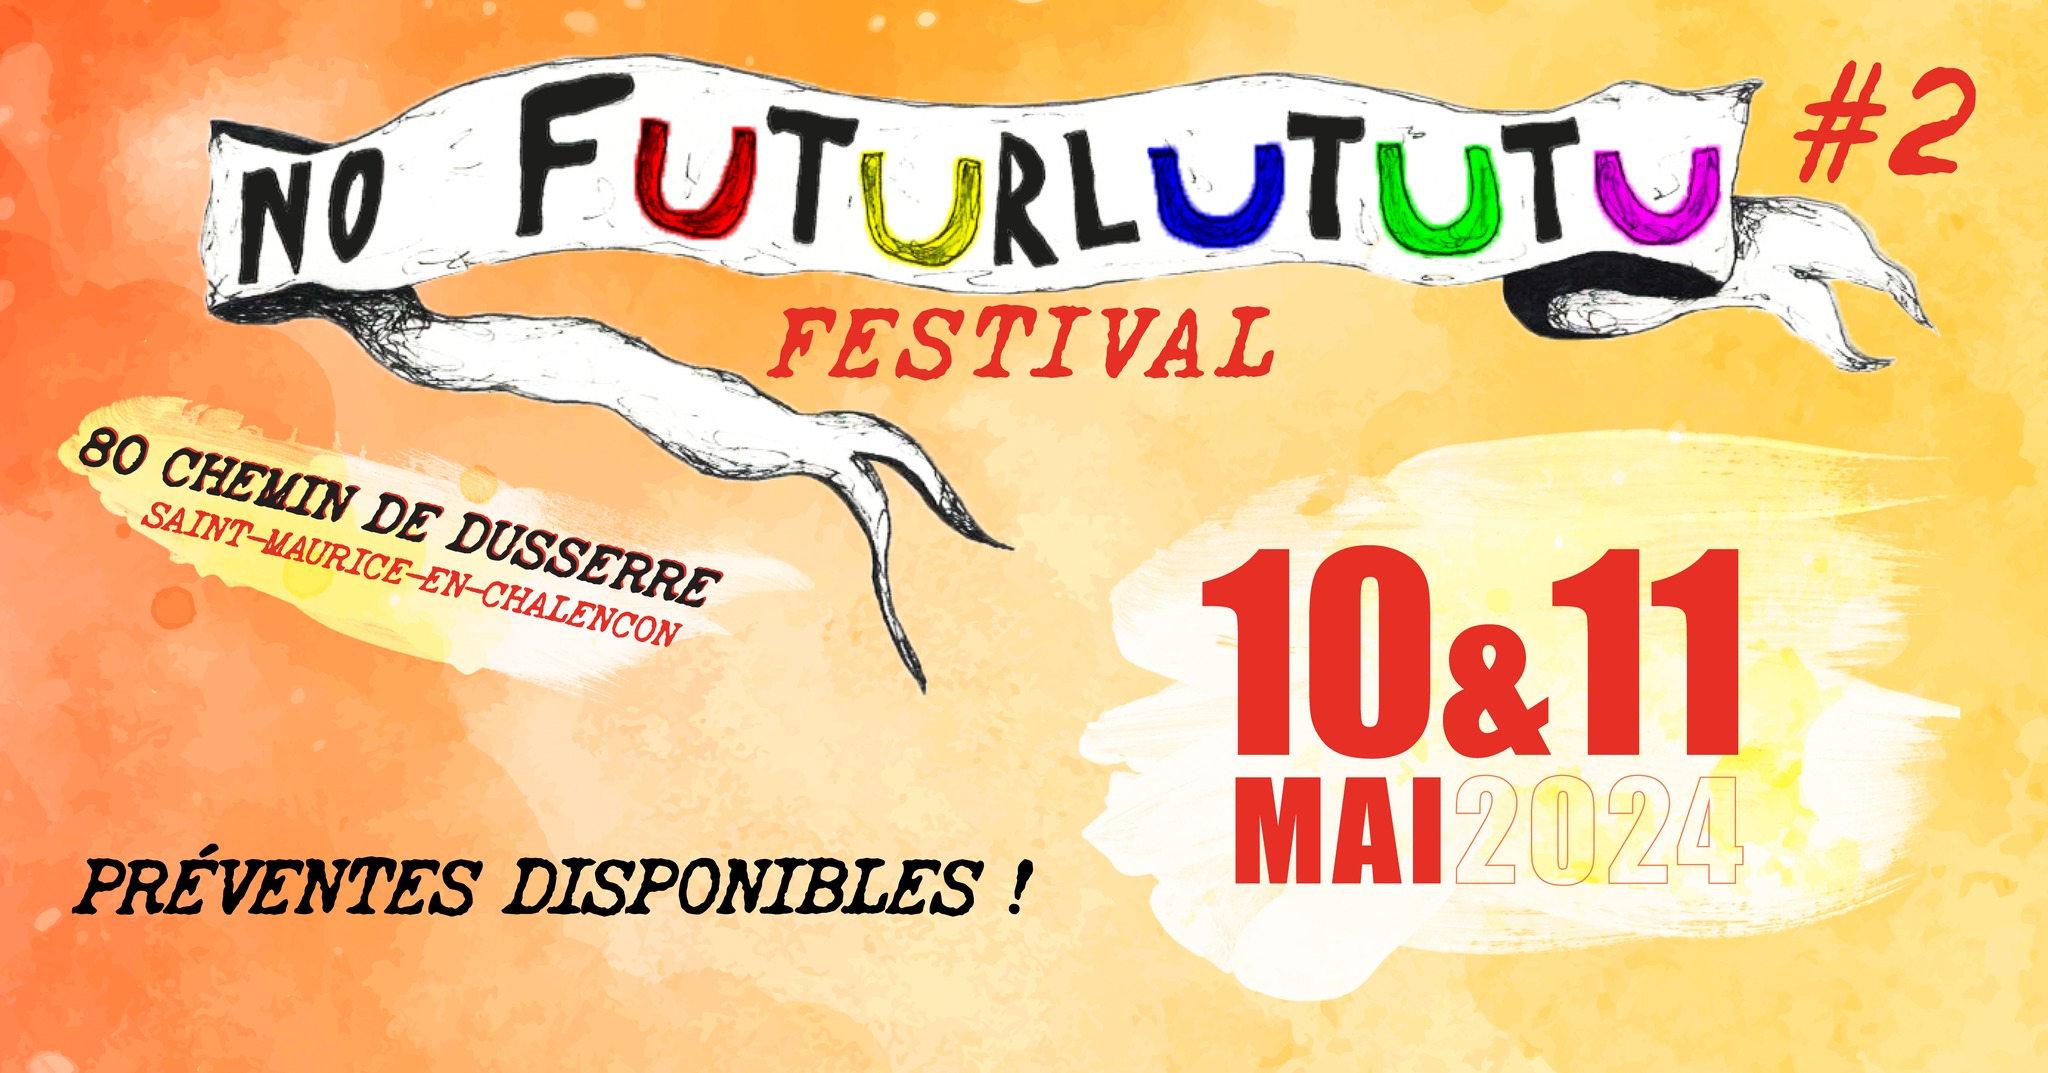 Alle leuke evenementen! : Festival No Futurlututu (édition #2)